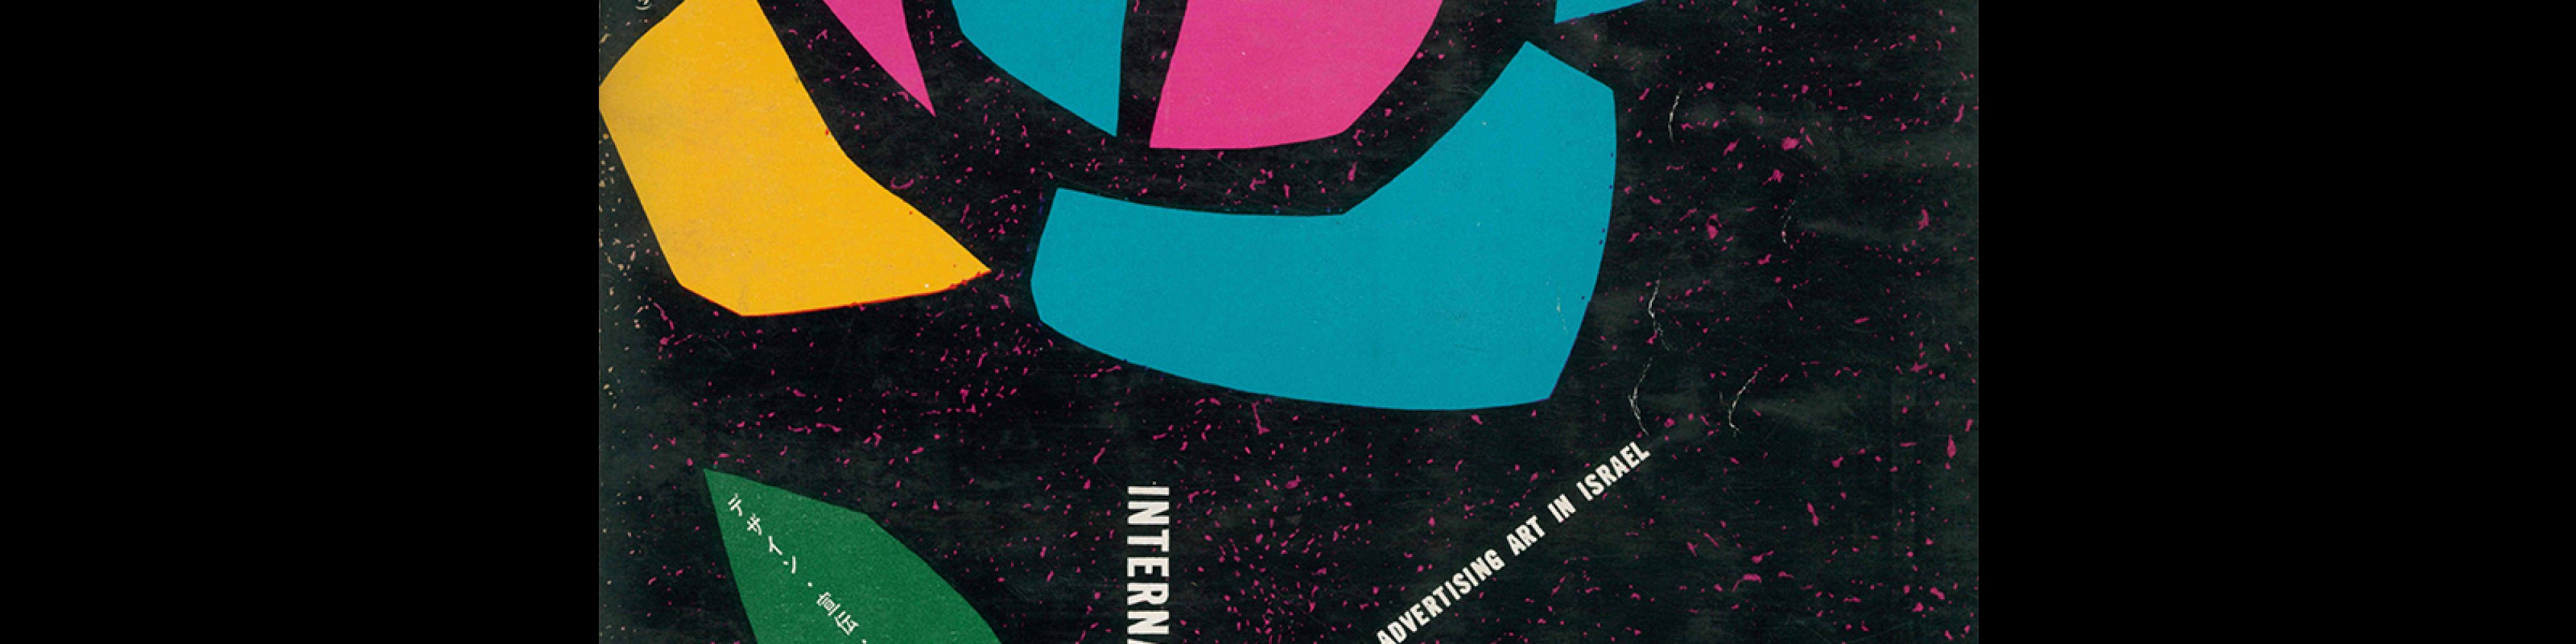 Idea 39, 1960-2. Cover design by Zvi Narkiss